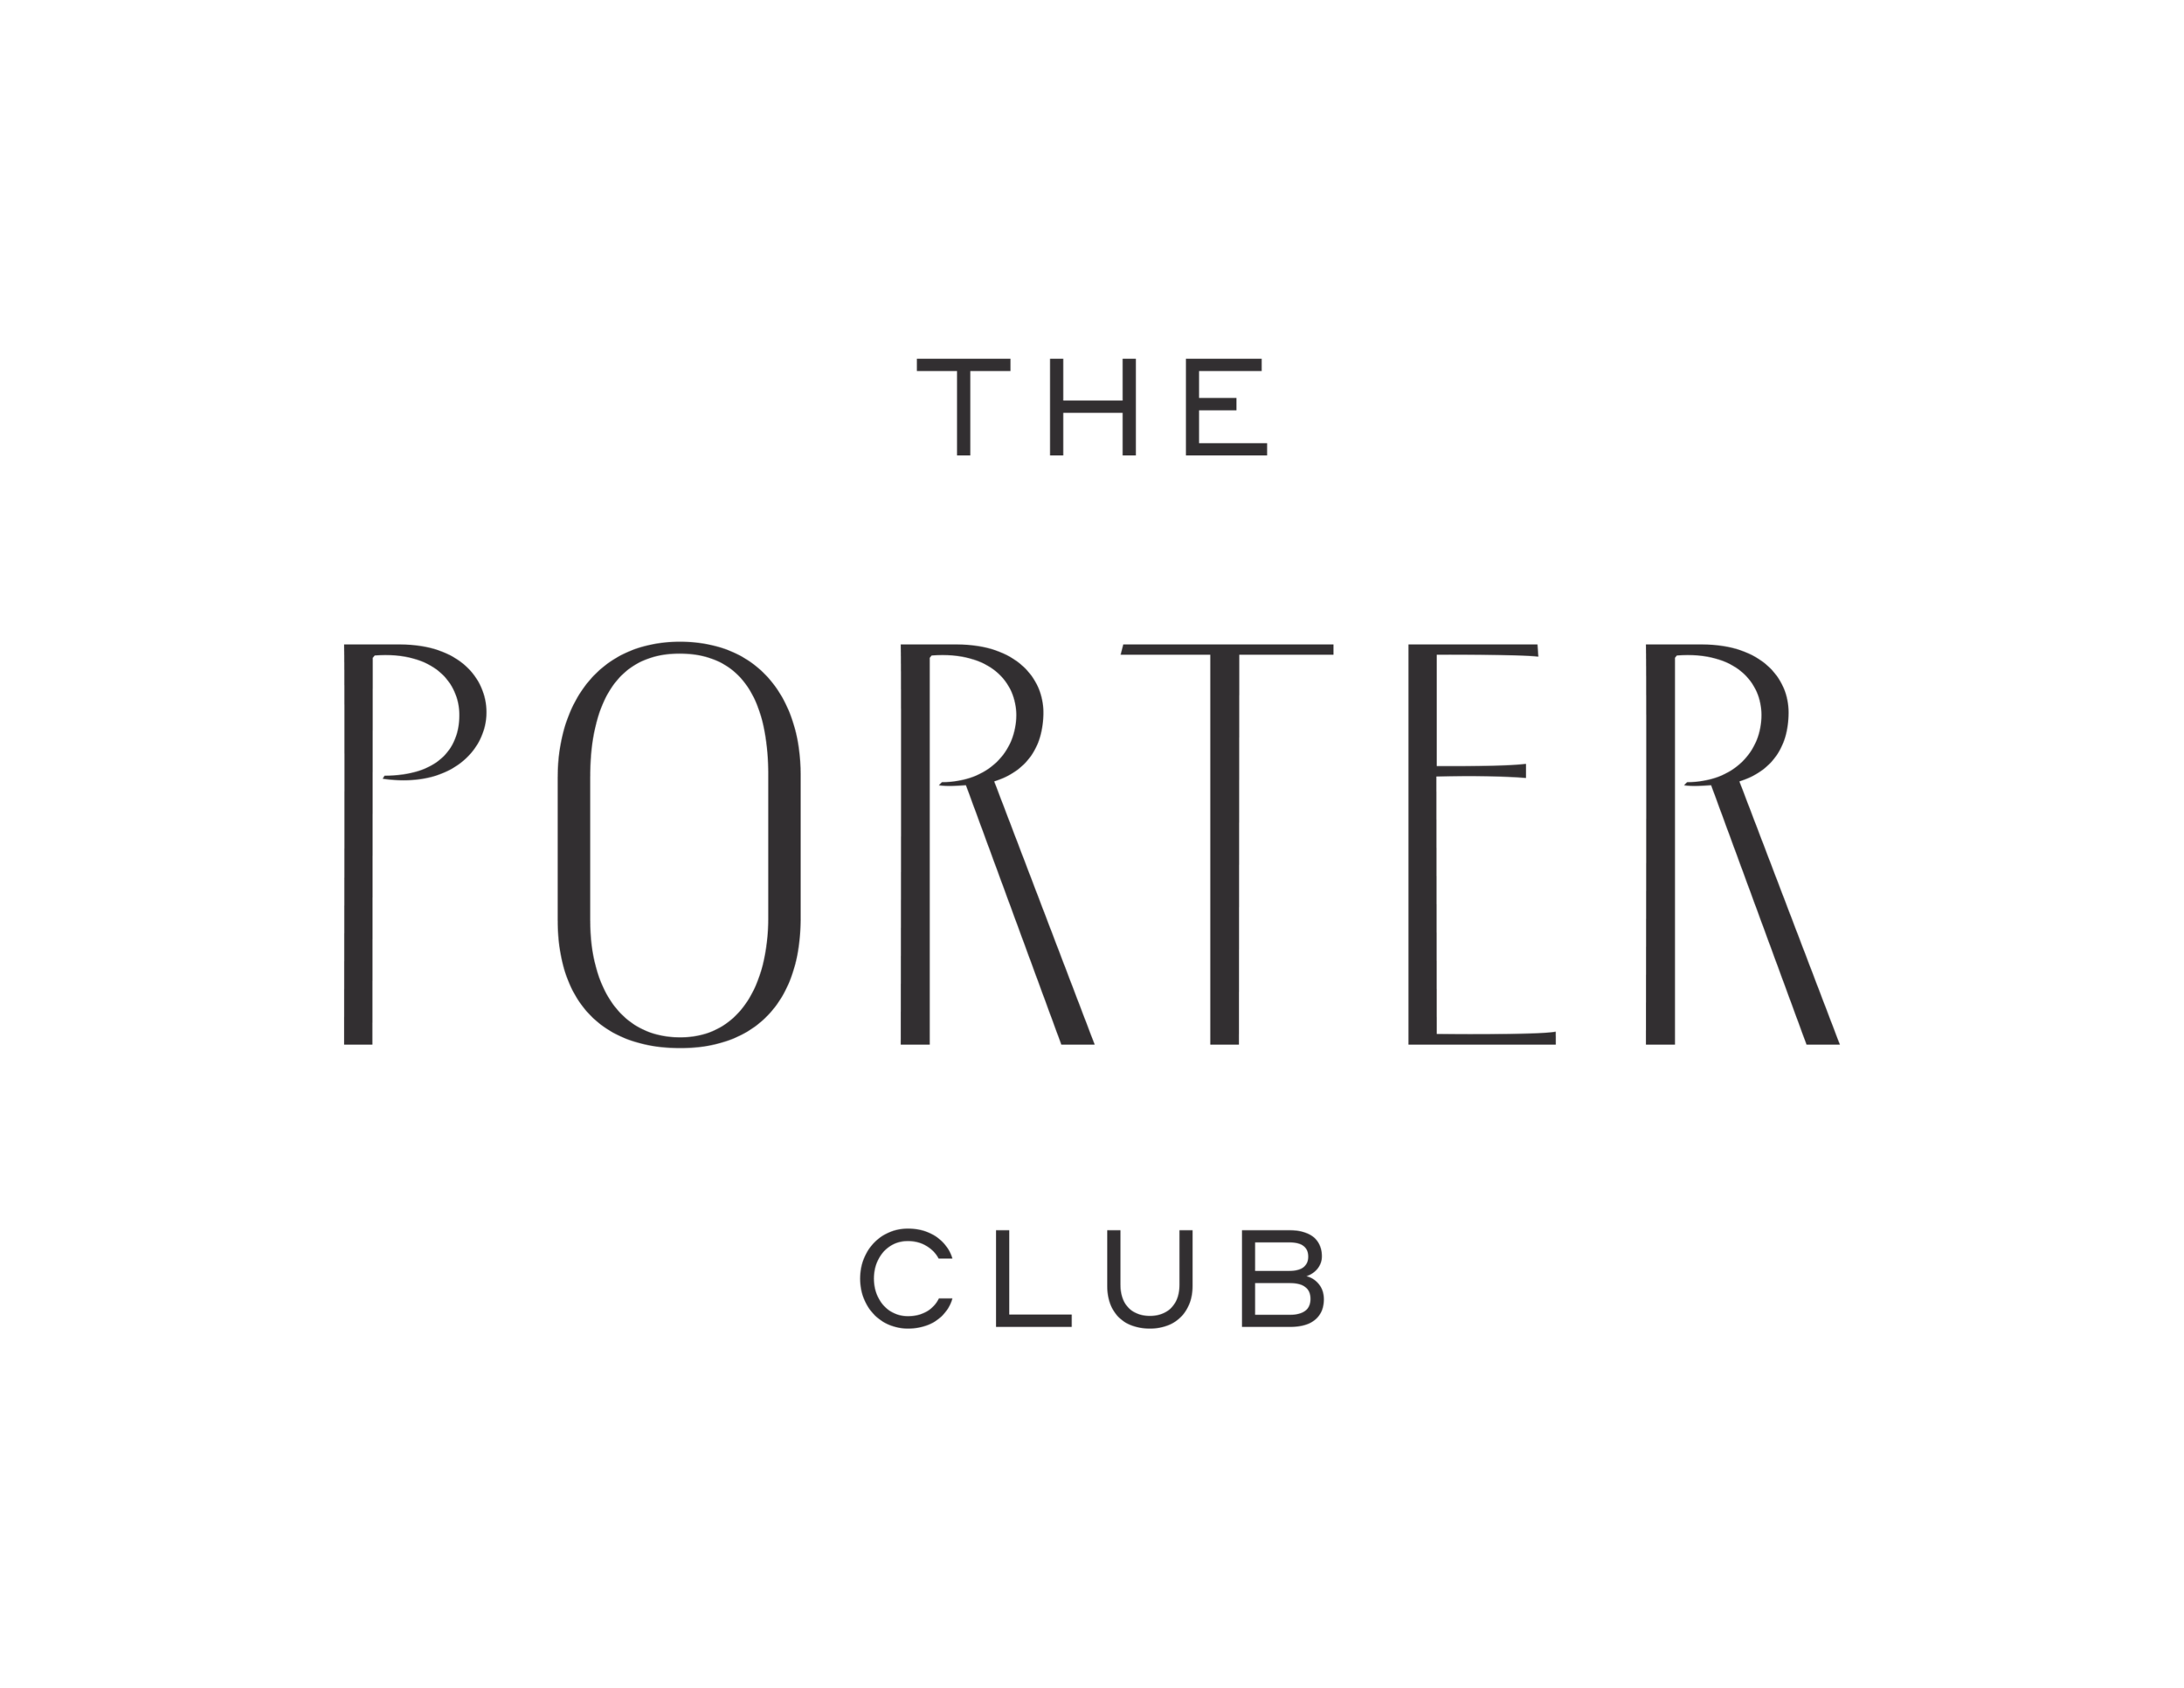 The Porter Club